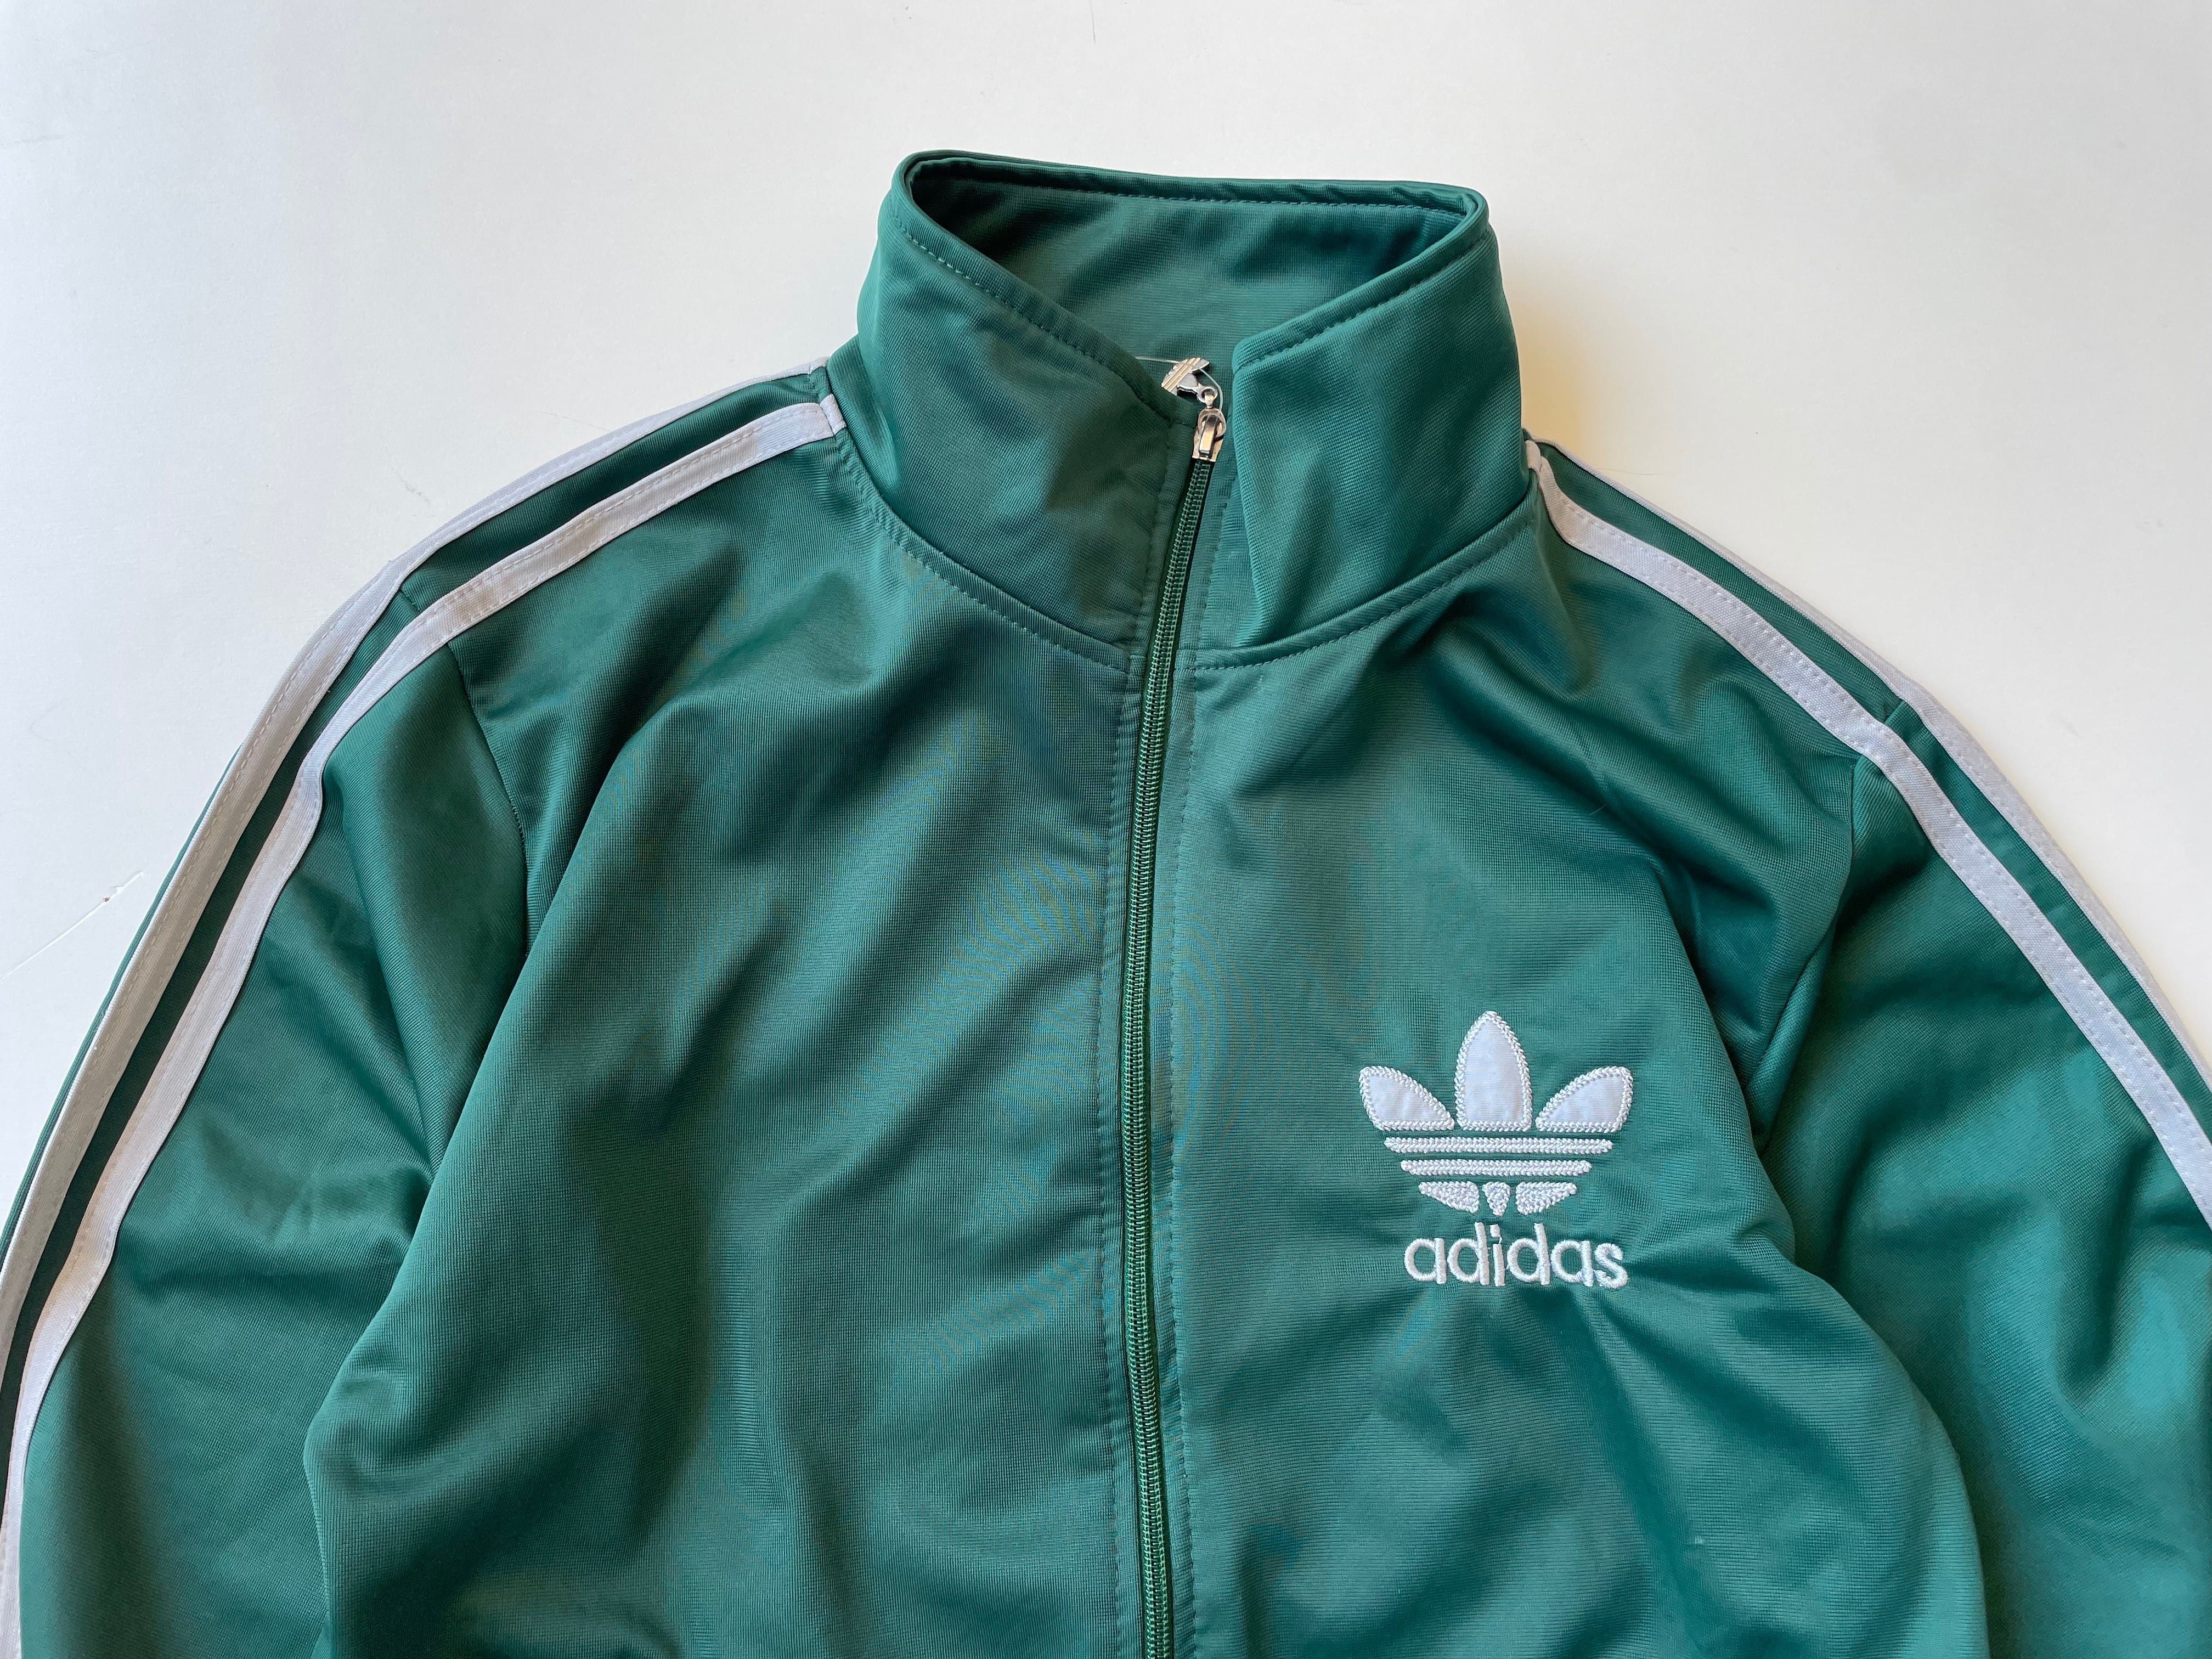 adidas track jacket col Green size M アディダス トラックジャケット ...